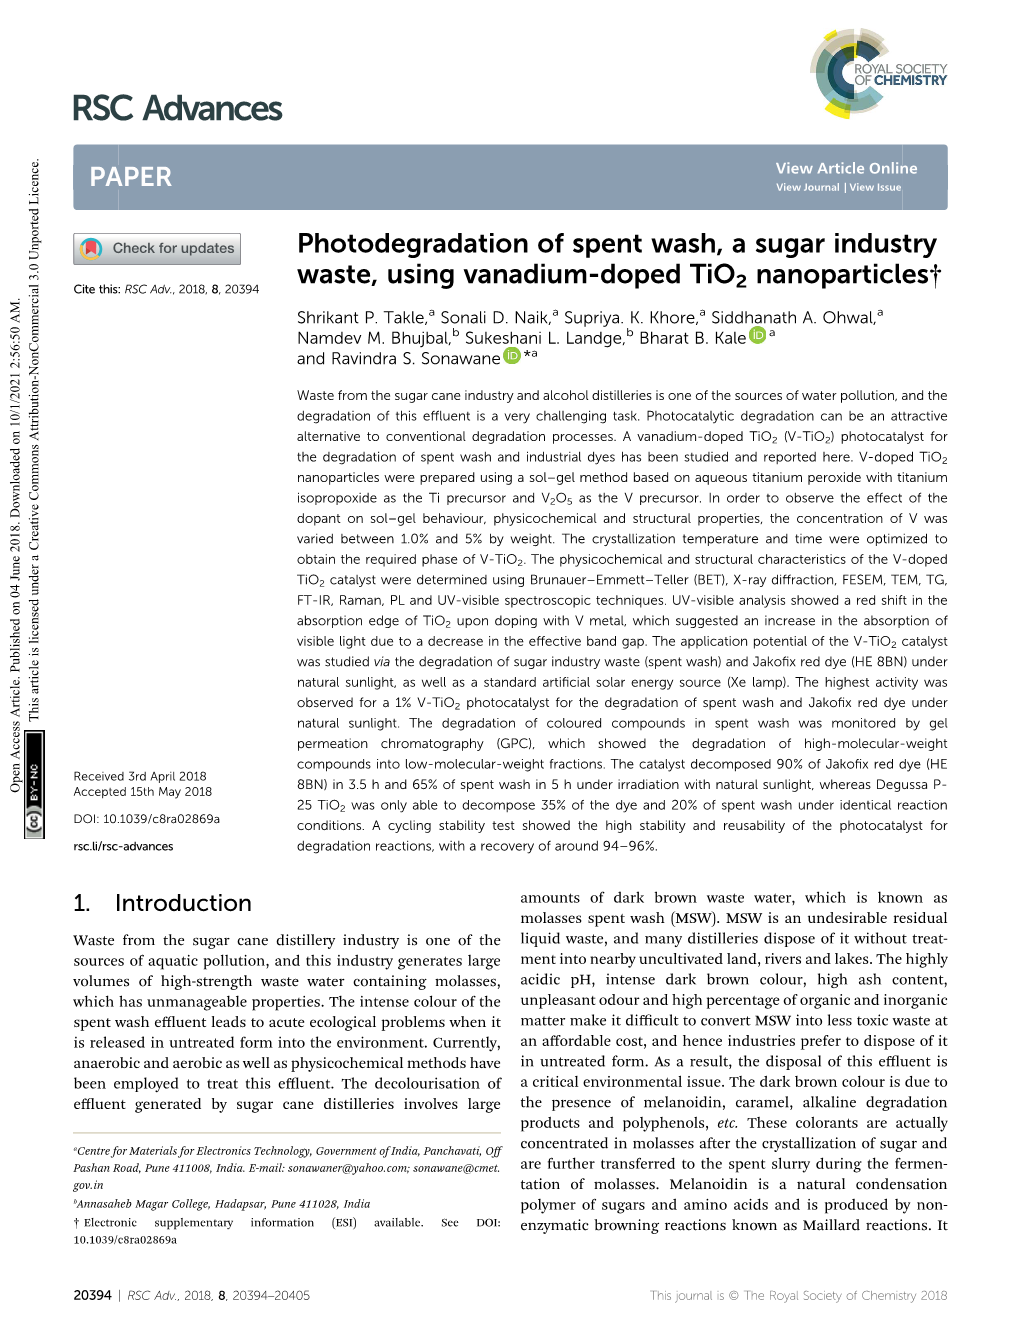 Photodegradation of Spent Wash, a Sugar Industry Waste, Using Vanadium-Doped Tio Nanoparticles† Cite This: RSC Adv.,2018,8,20394 2 Shrikant P